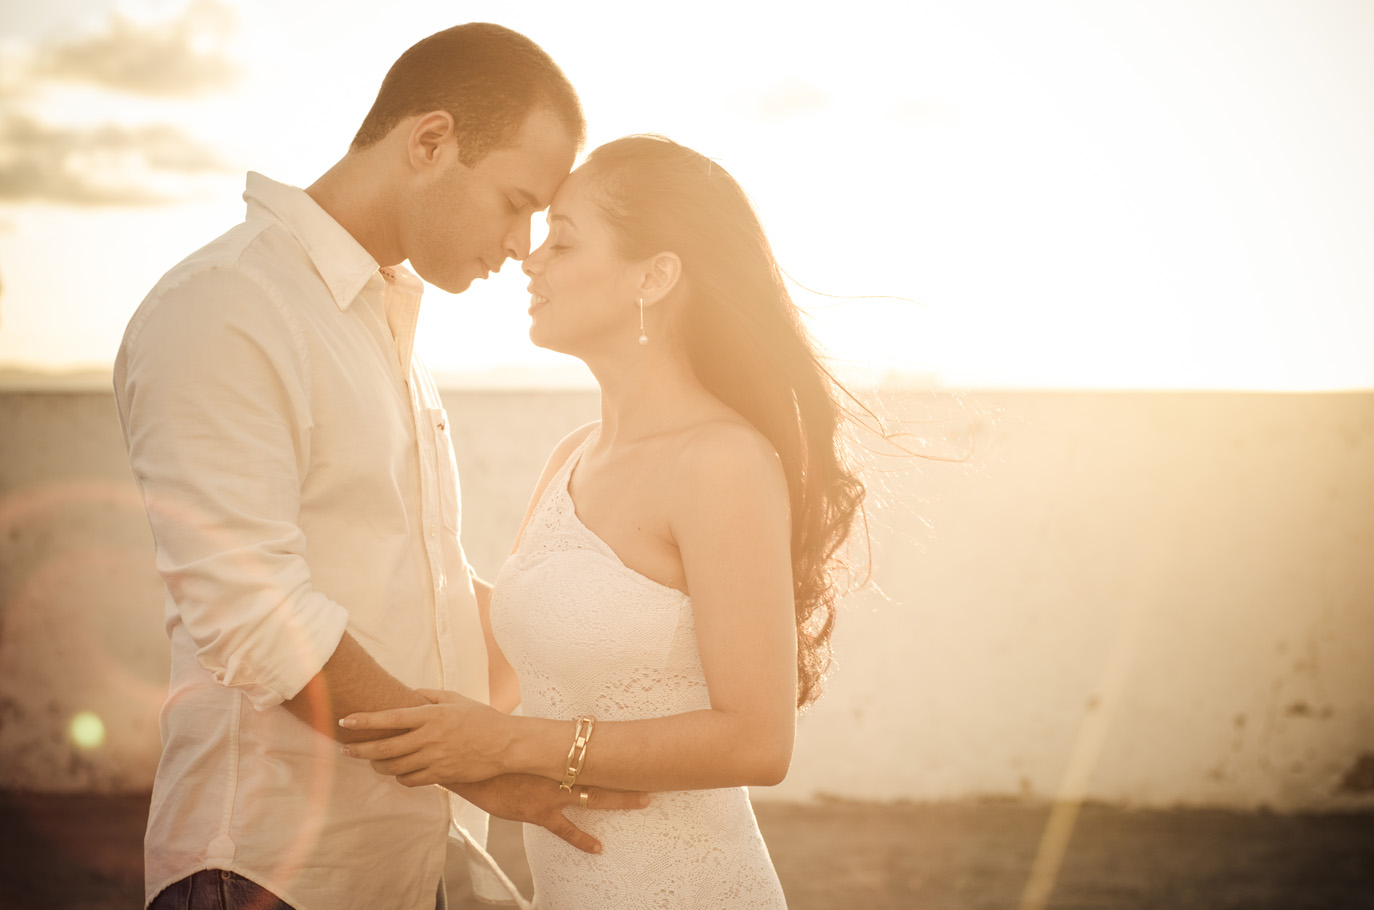 Ensaios pré-casamento, prewed, noivos - Salvador - Bahia - Mateus Lima 